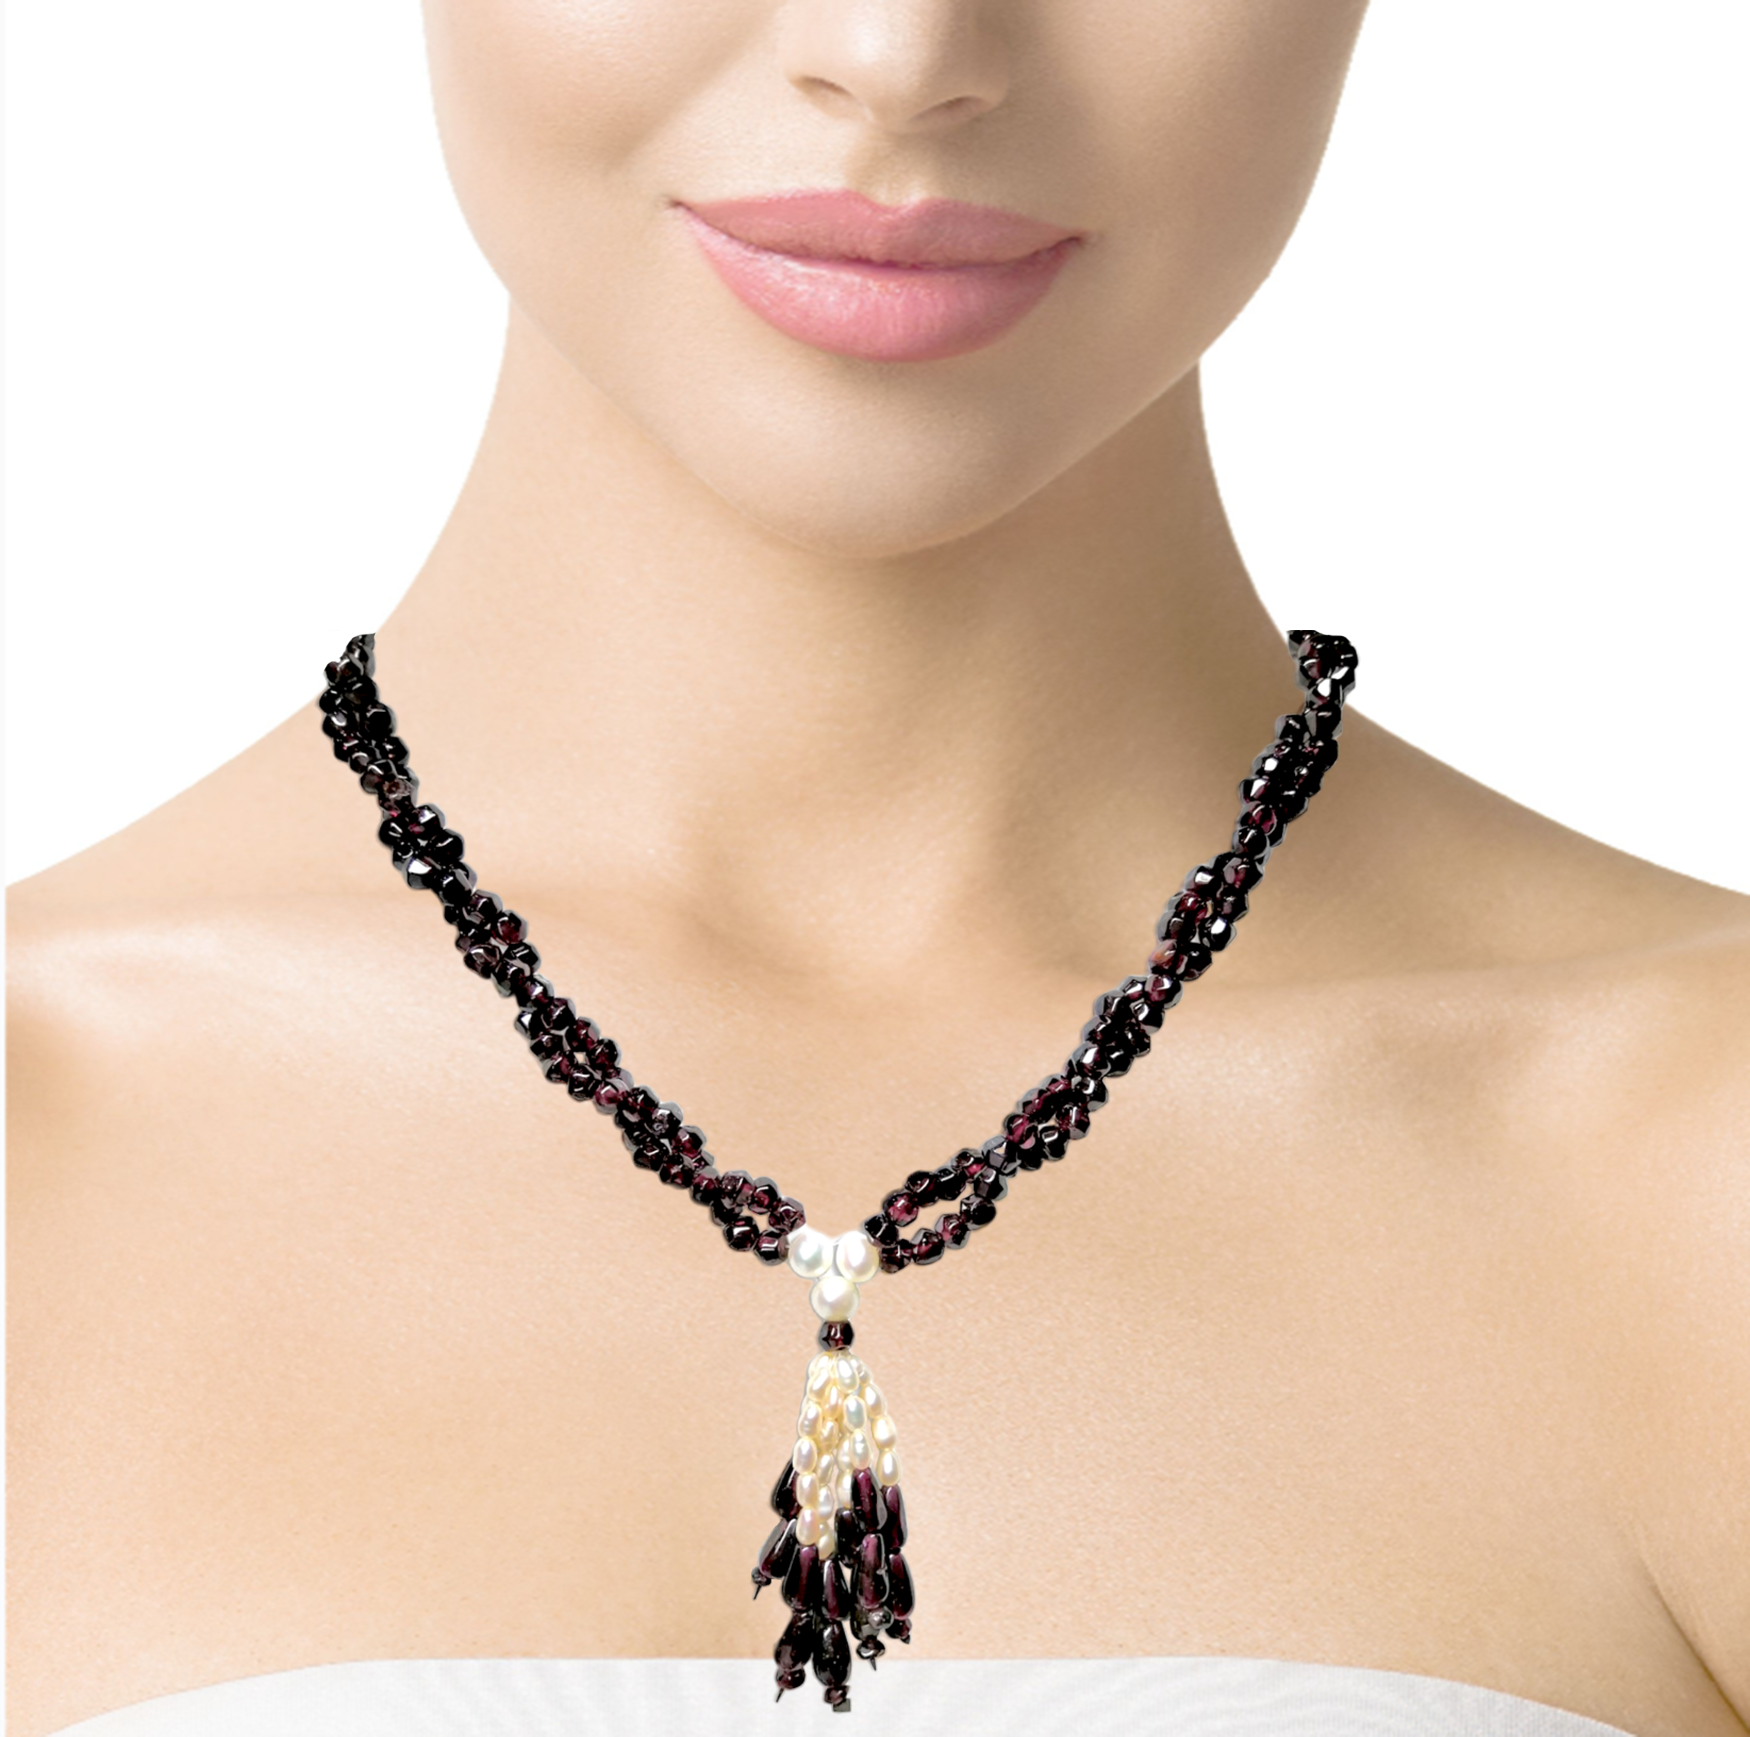 Natural Handmade Necklace 16"-18" Garnet, Pearls Gemstone Beads Jewellery